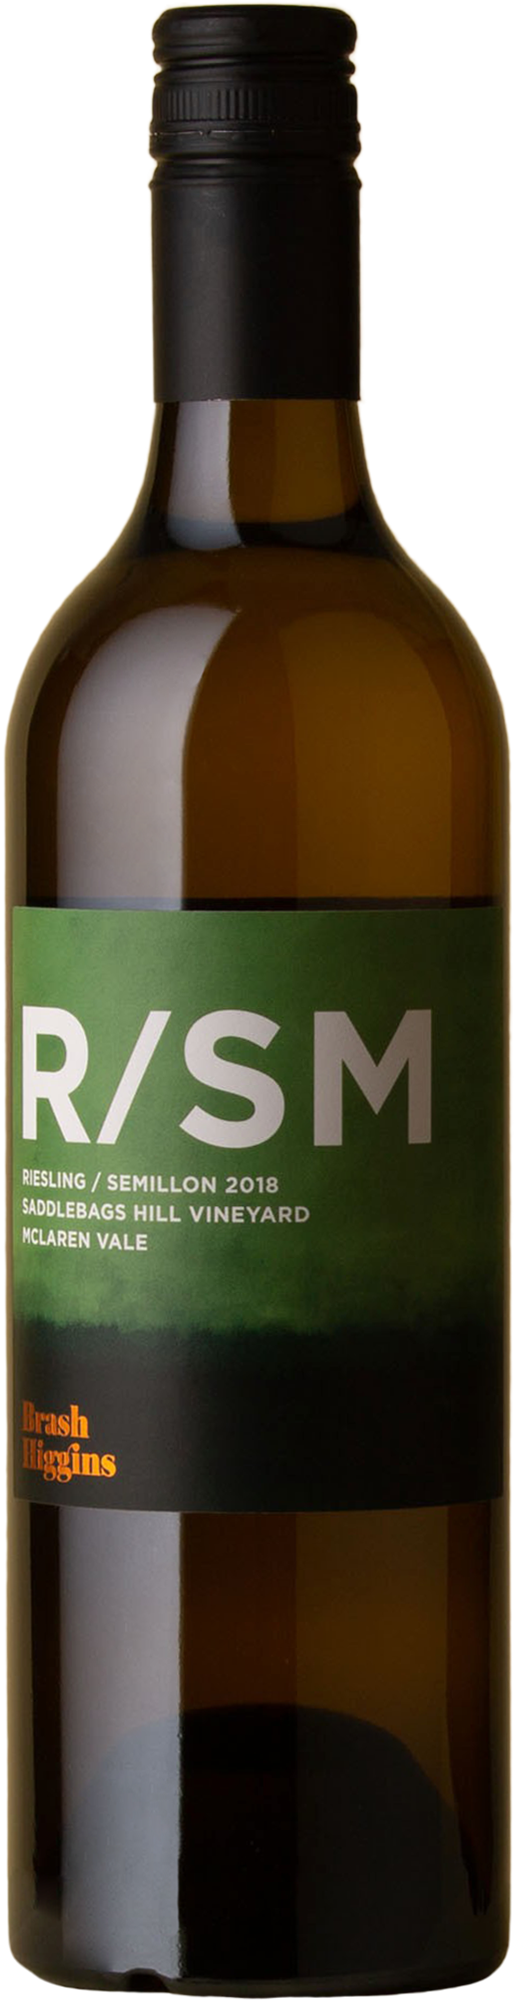 Brash Higgins - R/SM Riesling / Semillon 2018 White Wine